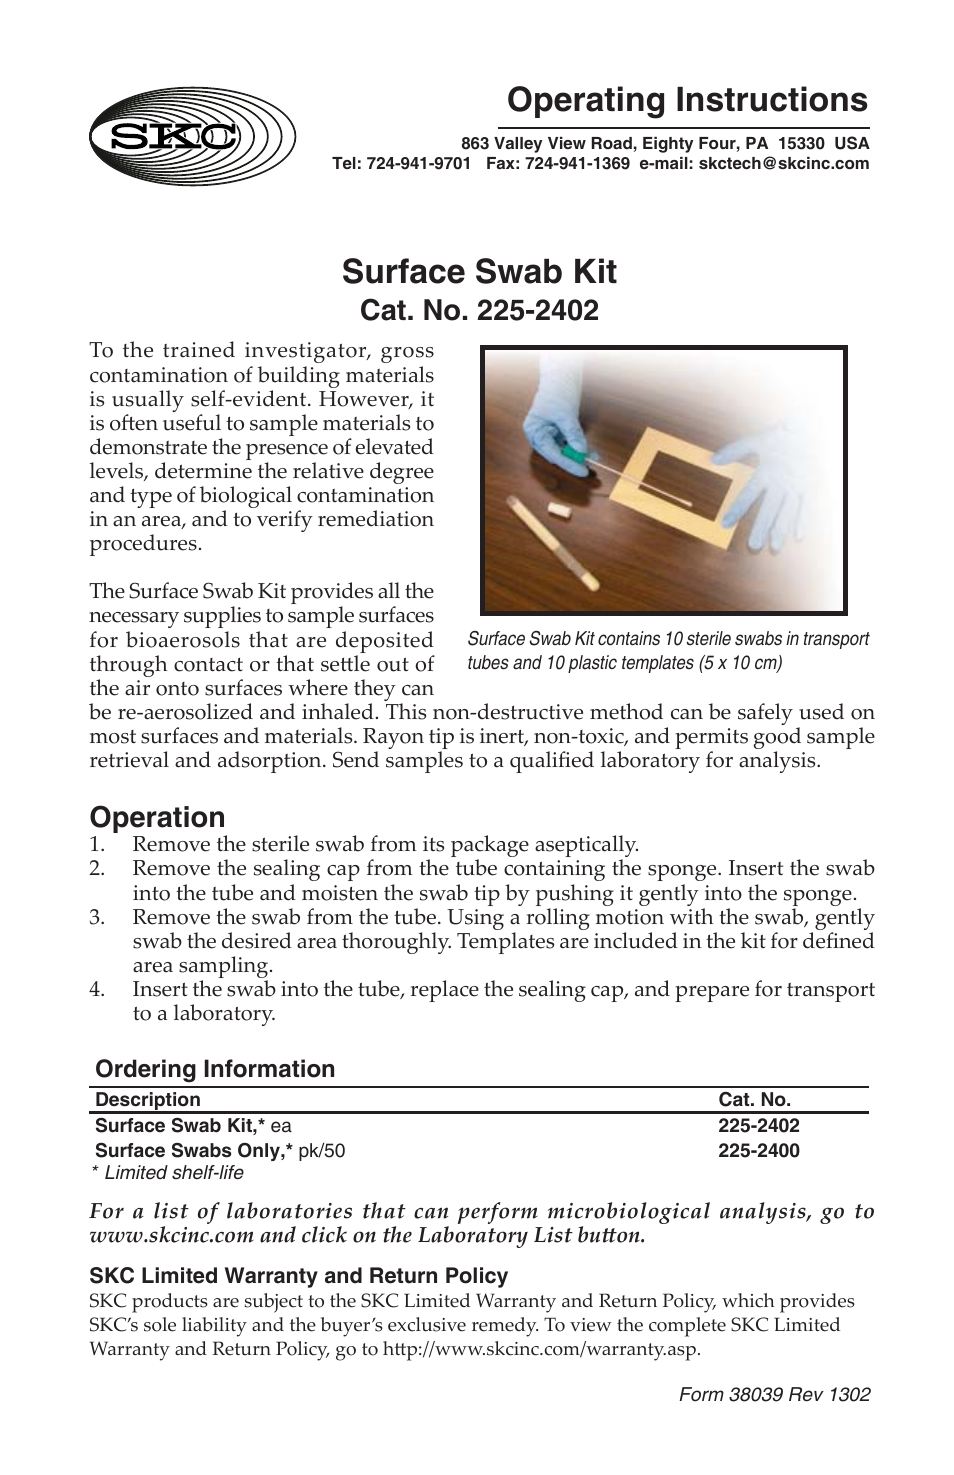 225-2402 Sterile Surface Swab Kit